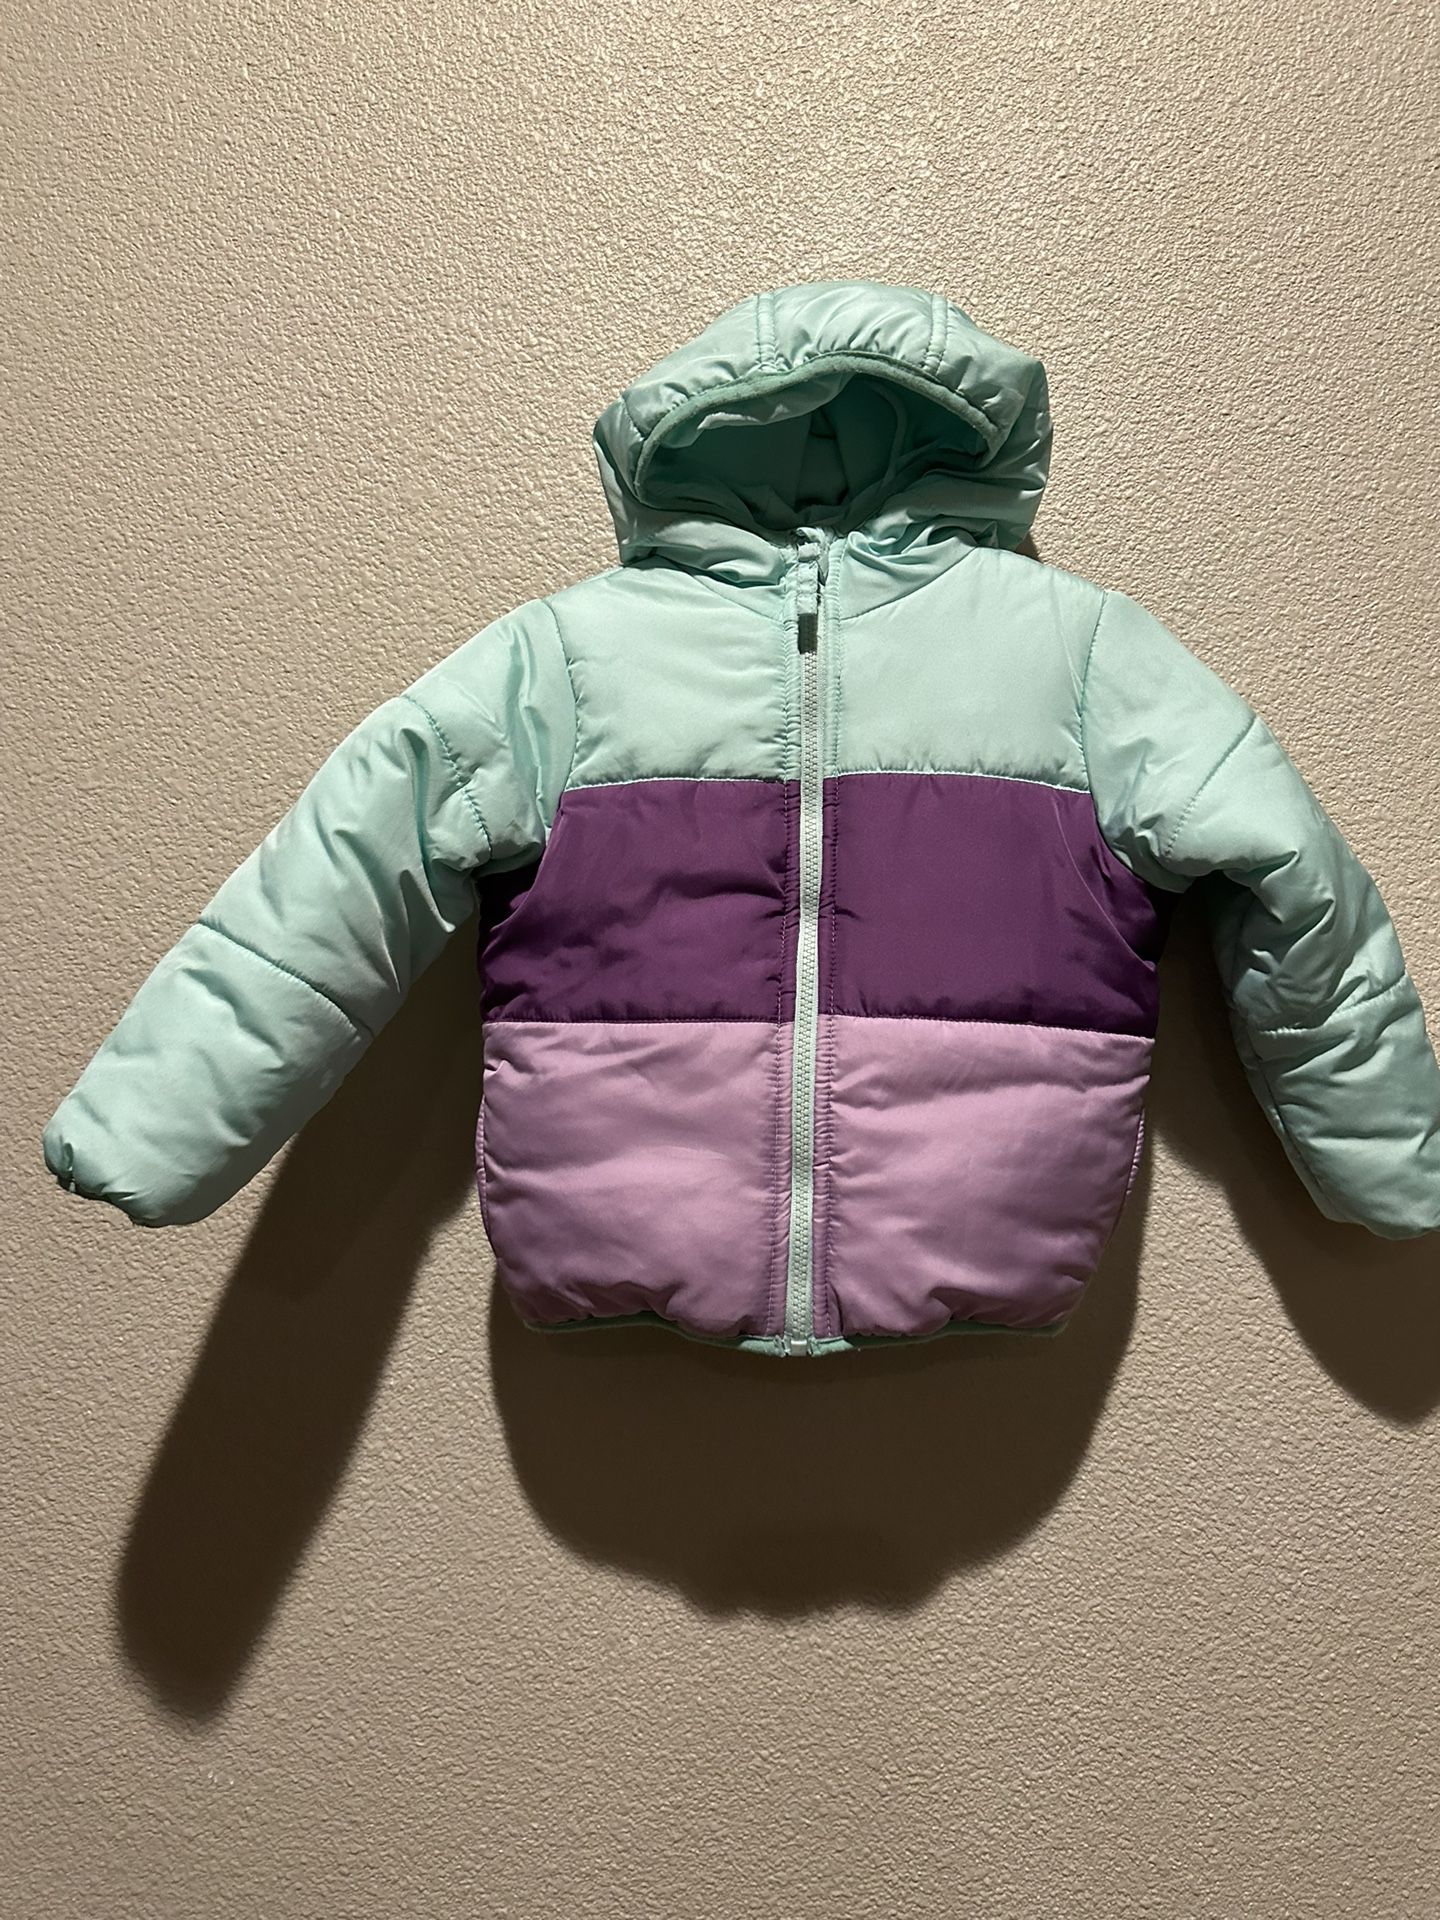 Toughskins Blue/Purple Girls Hooded Puffer Jacket Size 3T